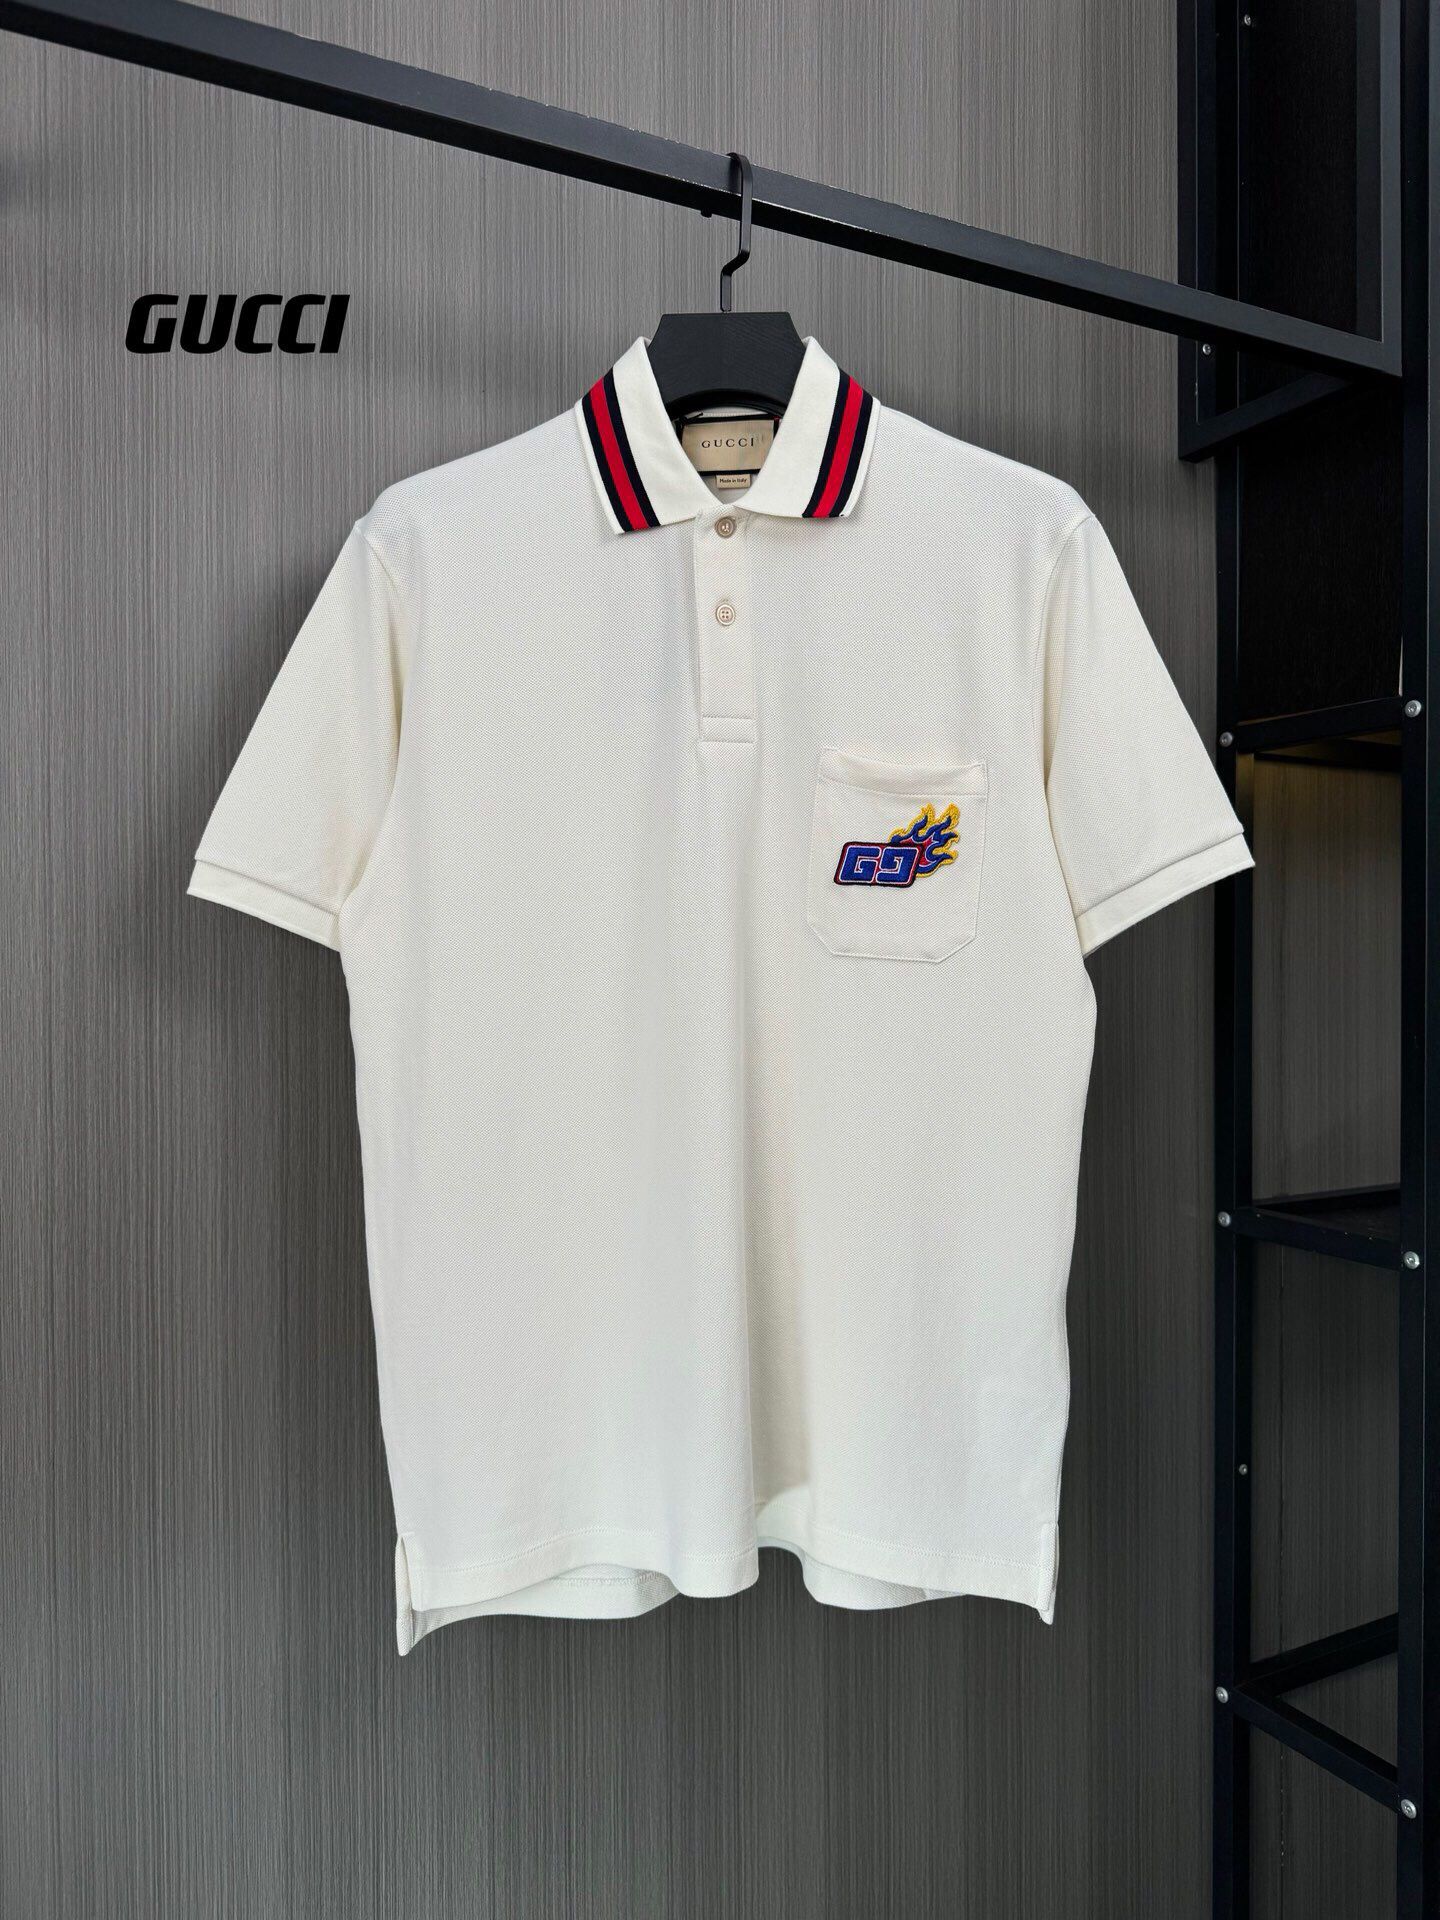 Gucci White Polo Shirt New 